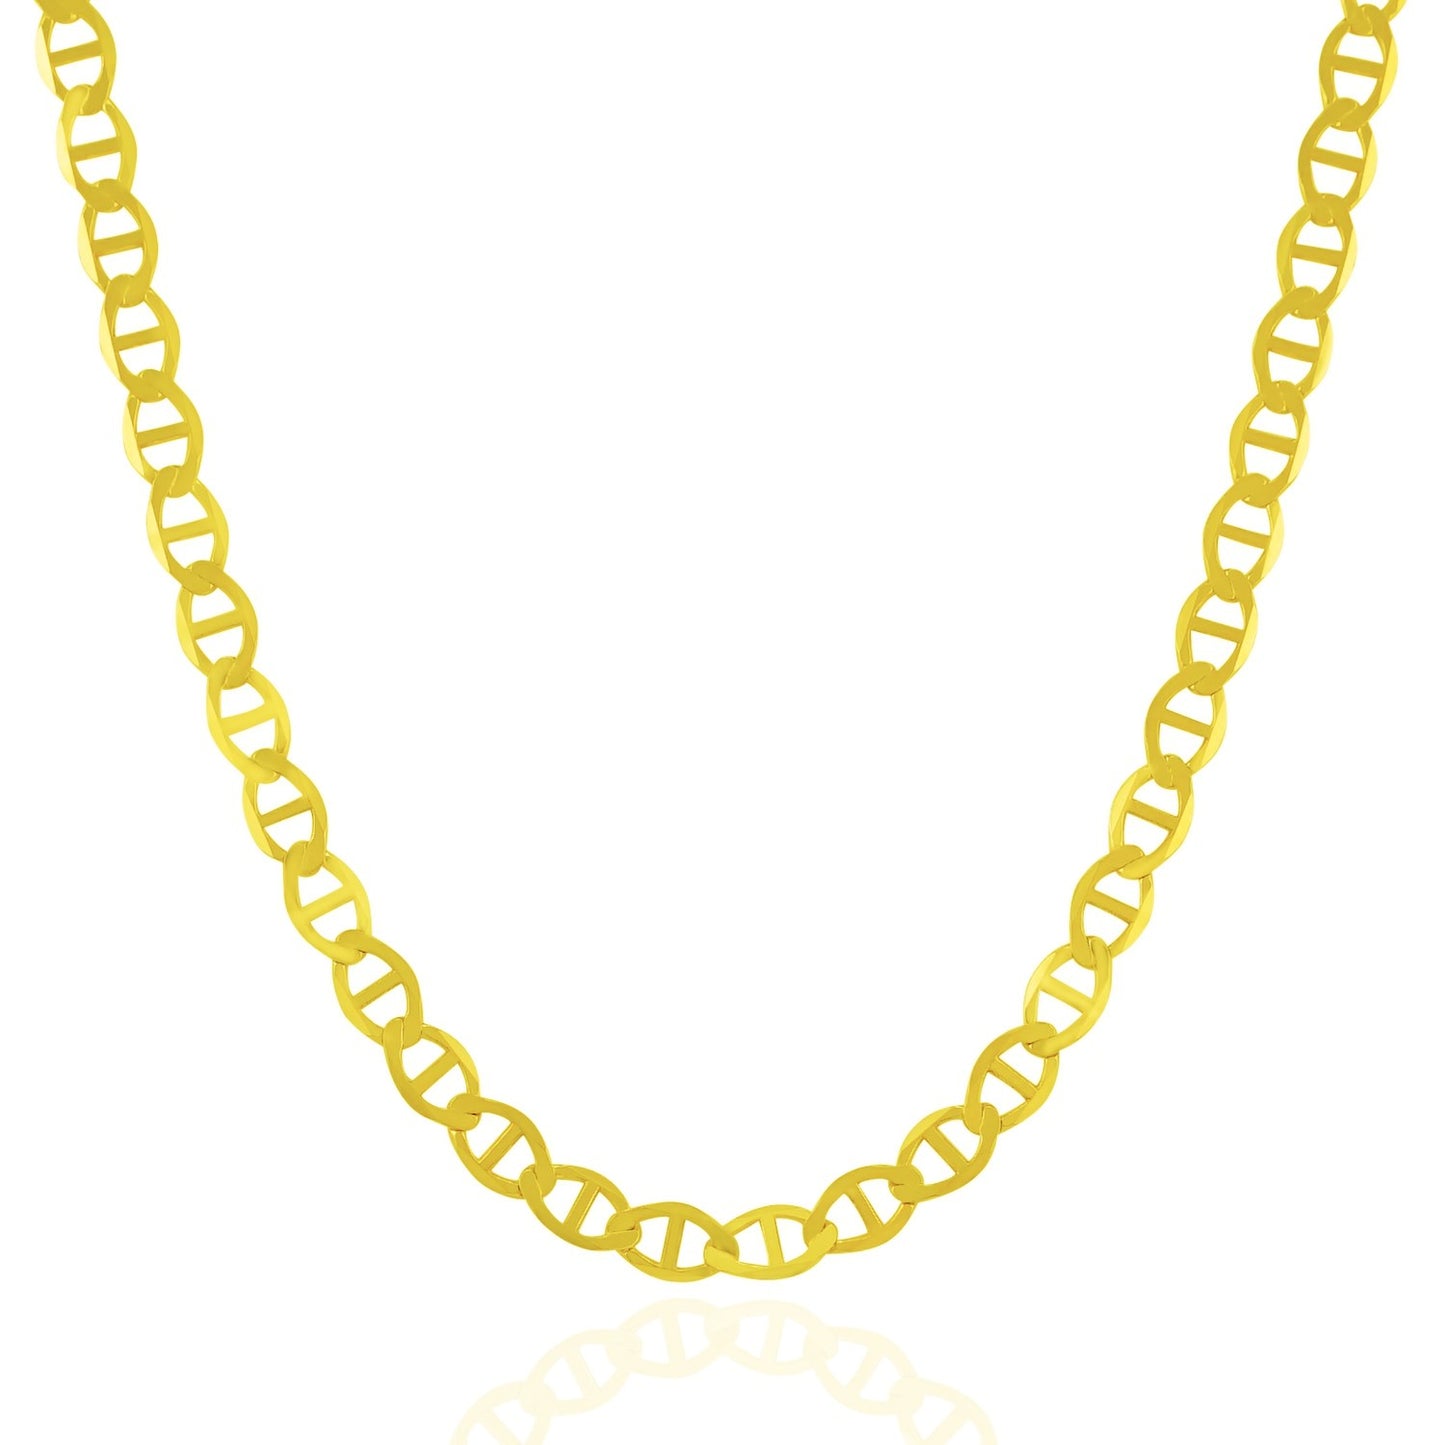 5.5mm 10k Yellow Gold Mariner Link Chain